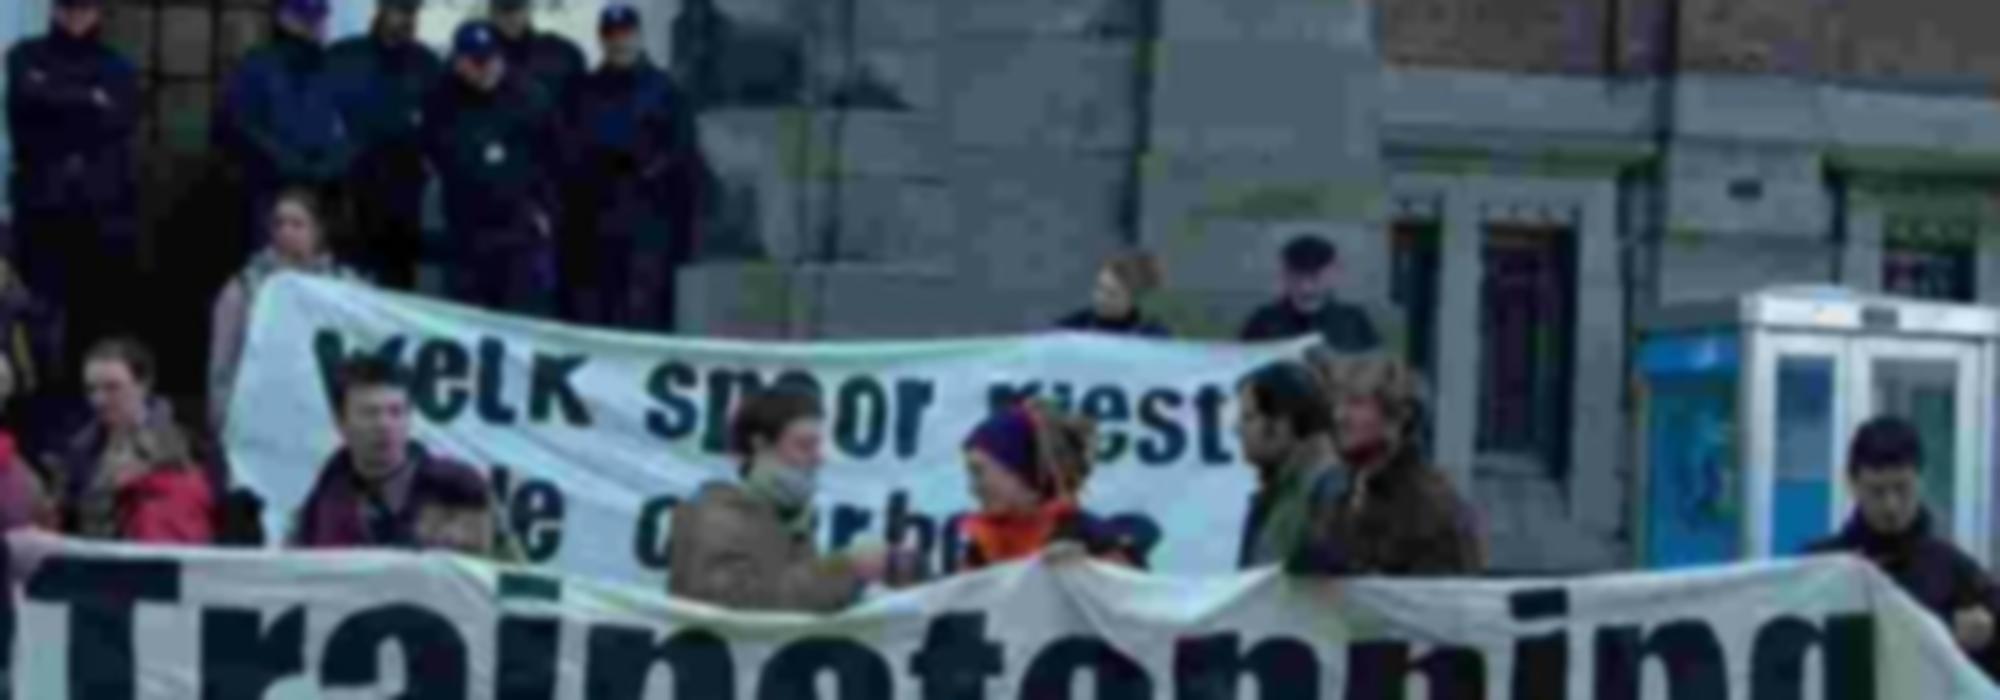 Activisten met banner 'trainstopping'